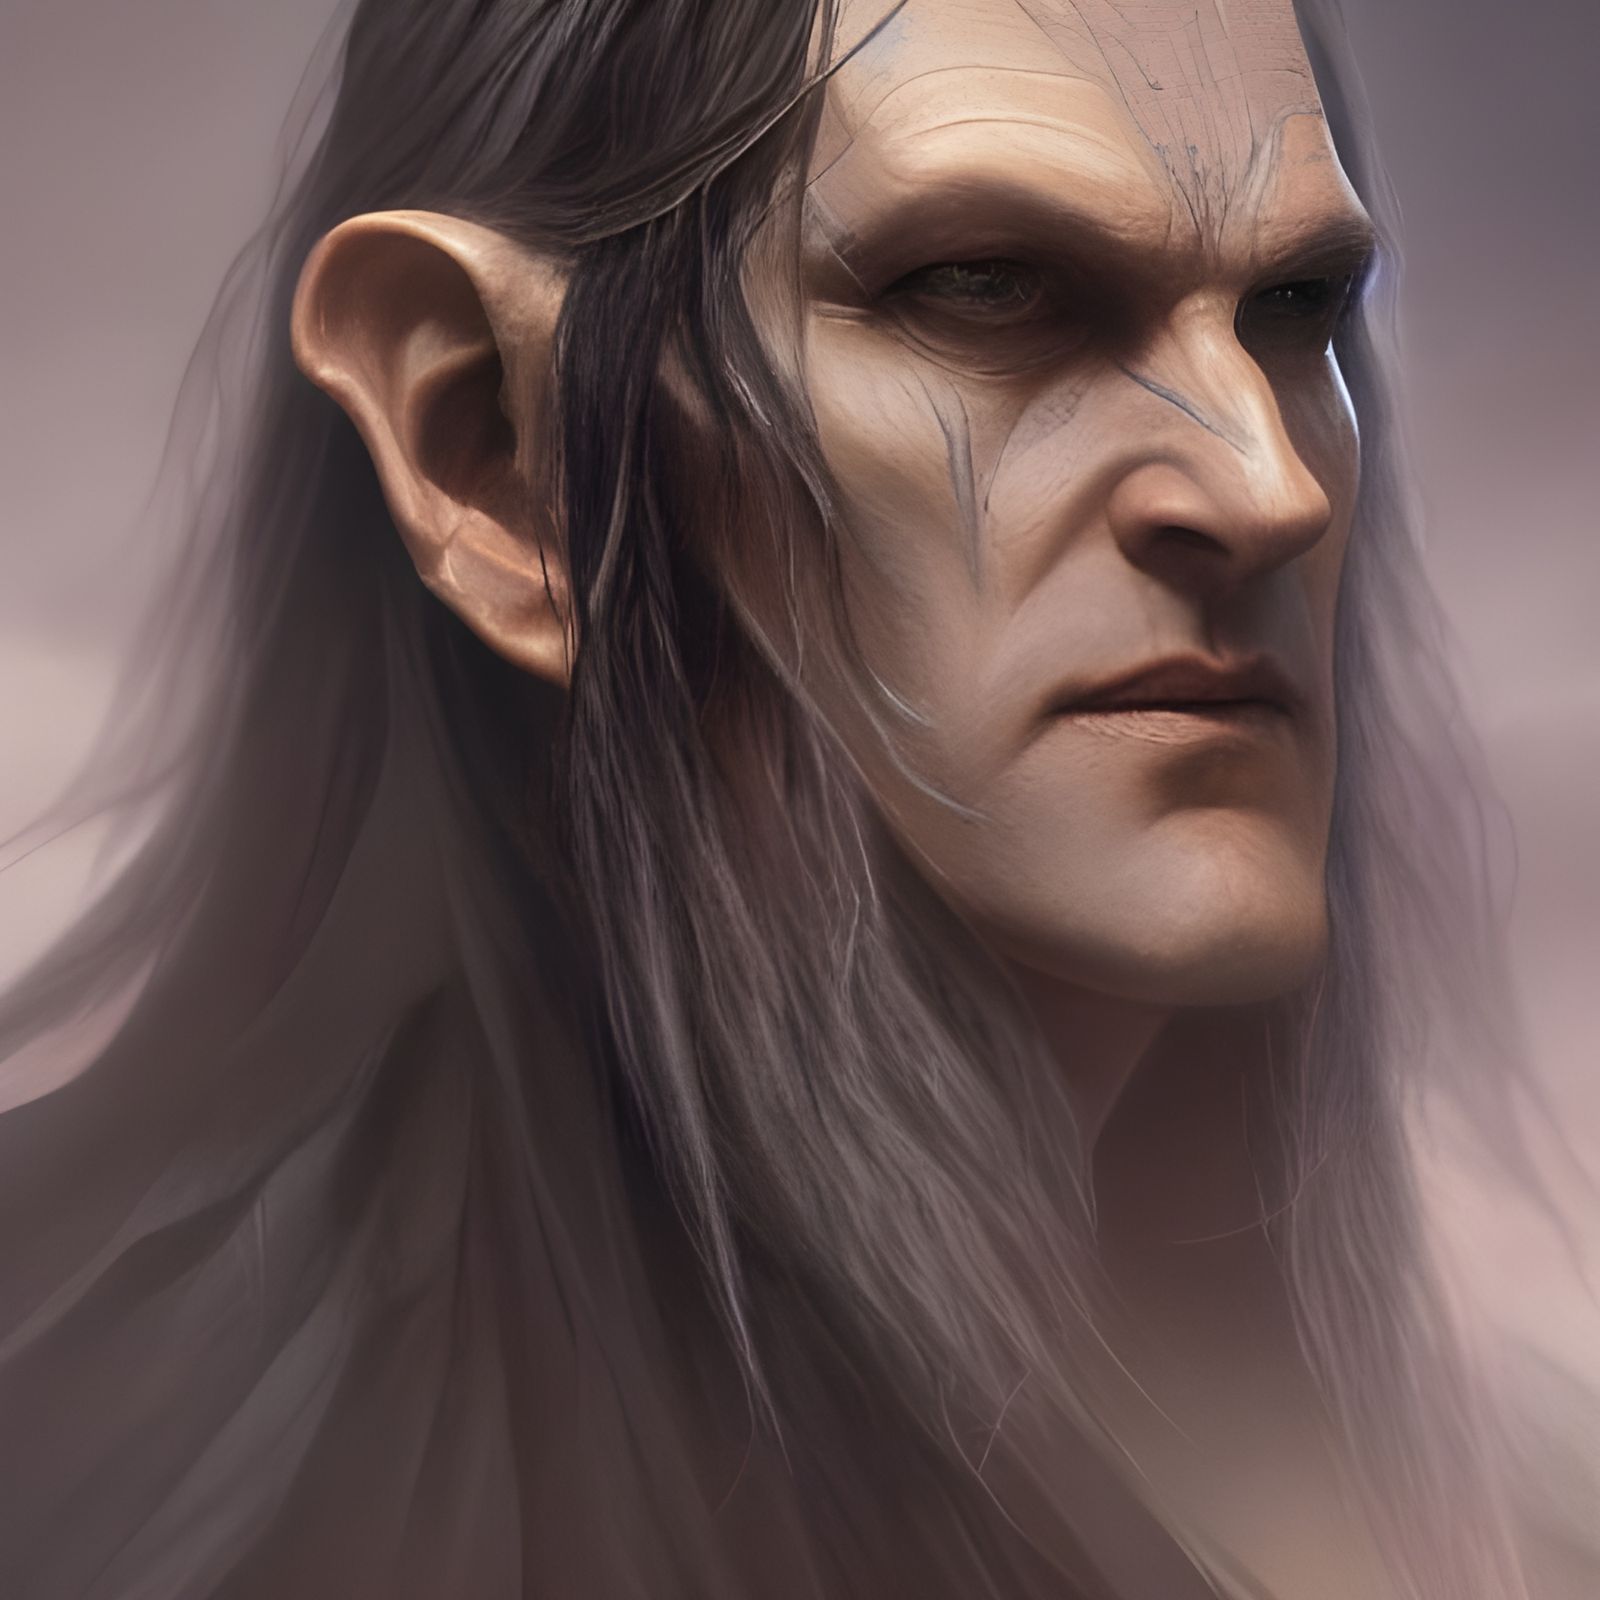 Silmarillion, photorealistic portrait of Melkor - Morgoth, the first ...